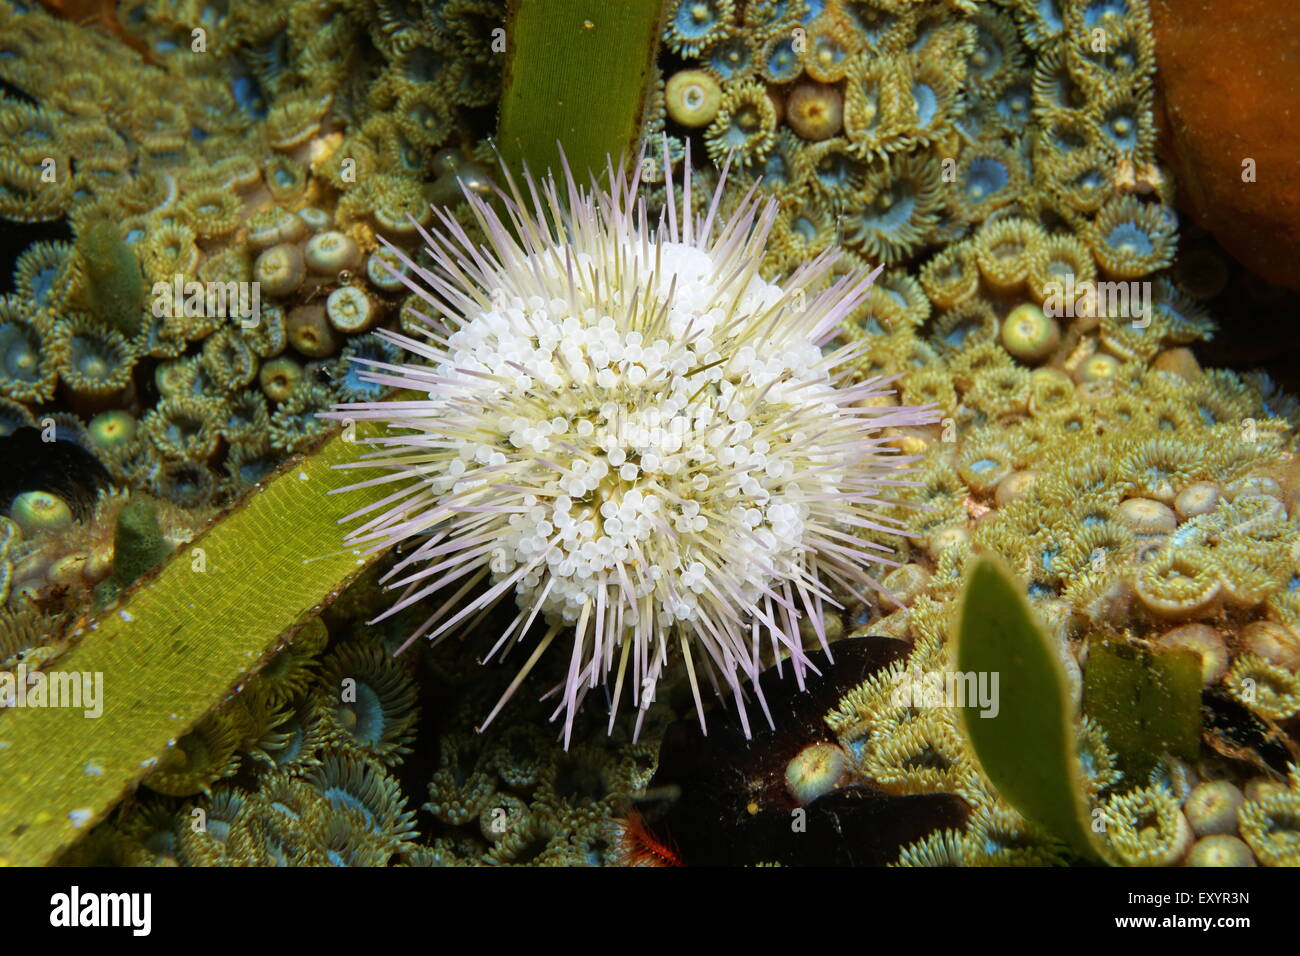 Live specimen of Variegated sea urchin or green sea urchin, Lytechinus variegatus, underwater in the Caribbean sea, Panama Stock Photo